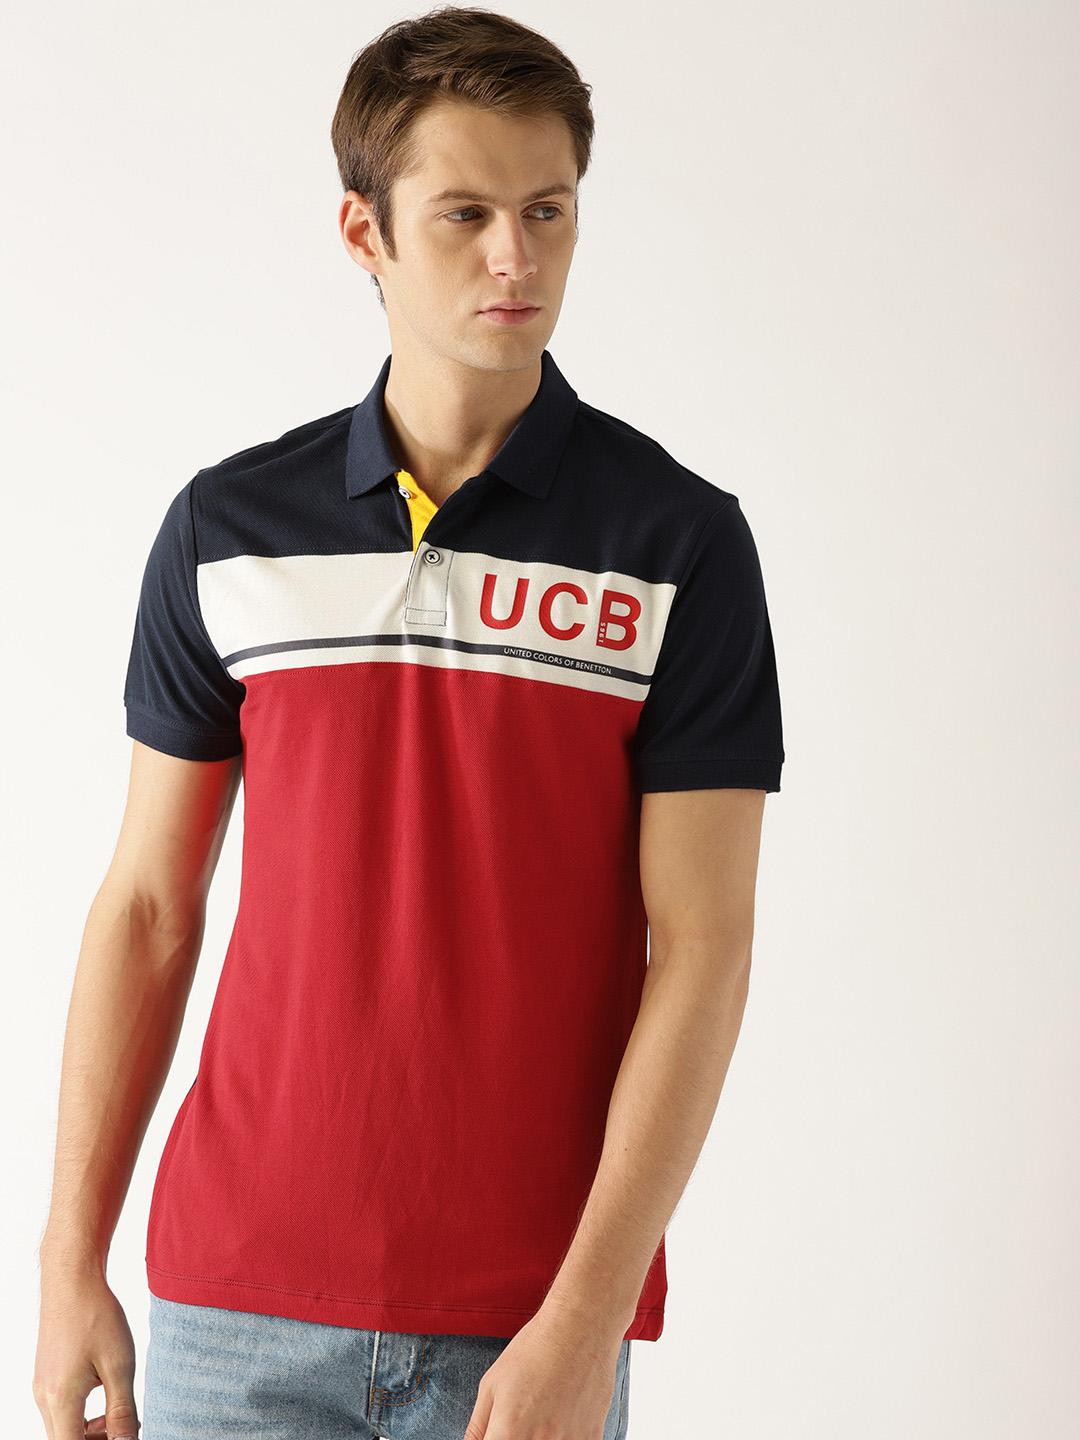 ucb red t shirt